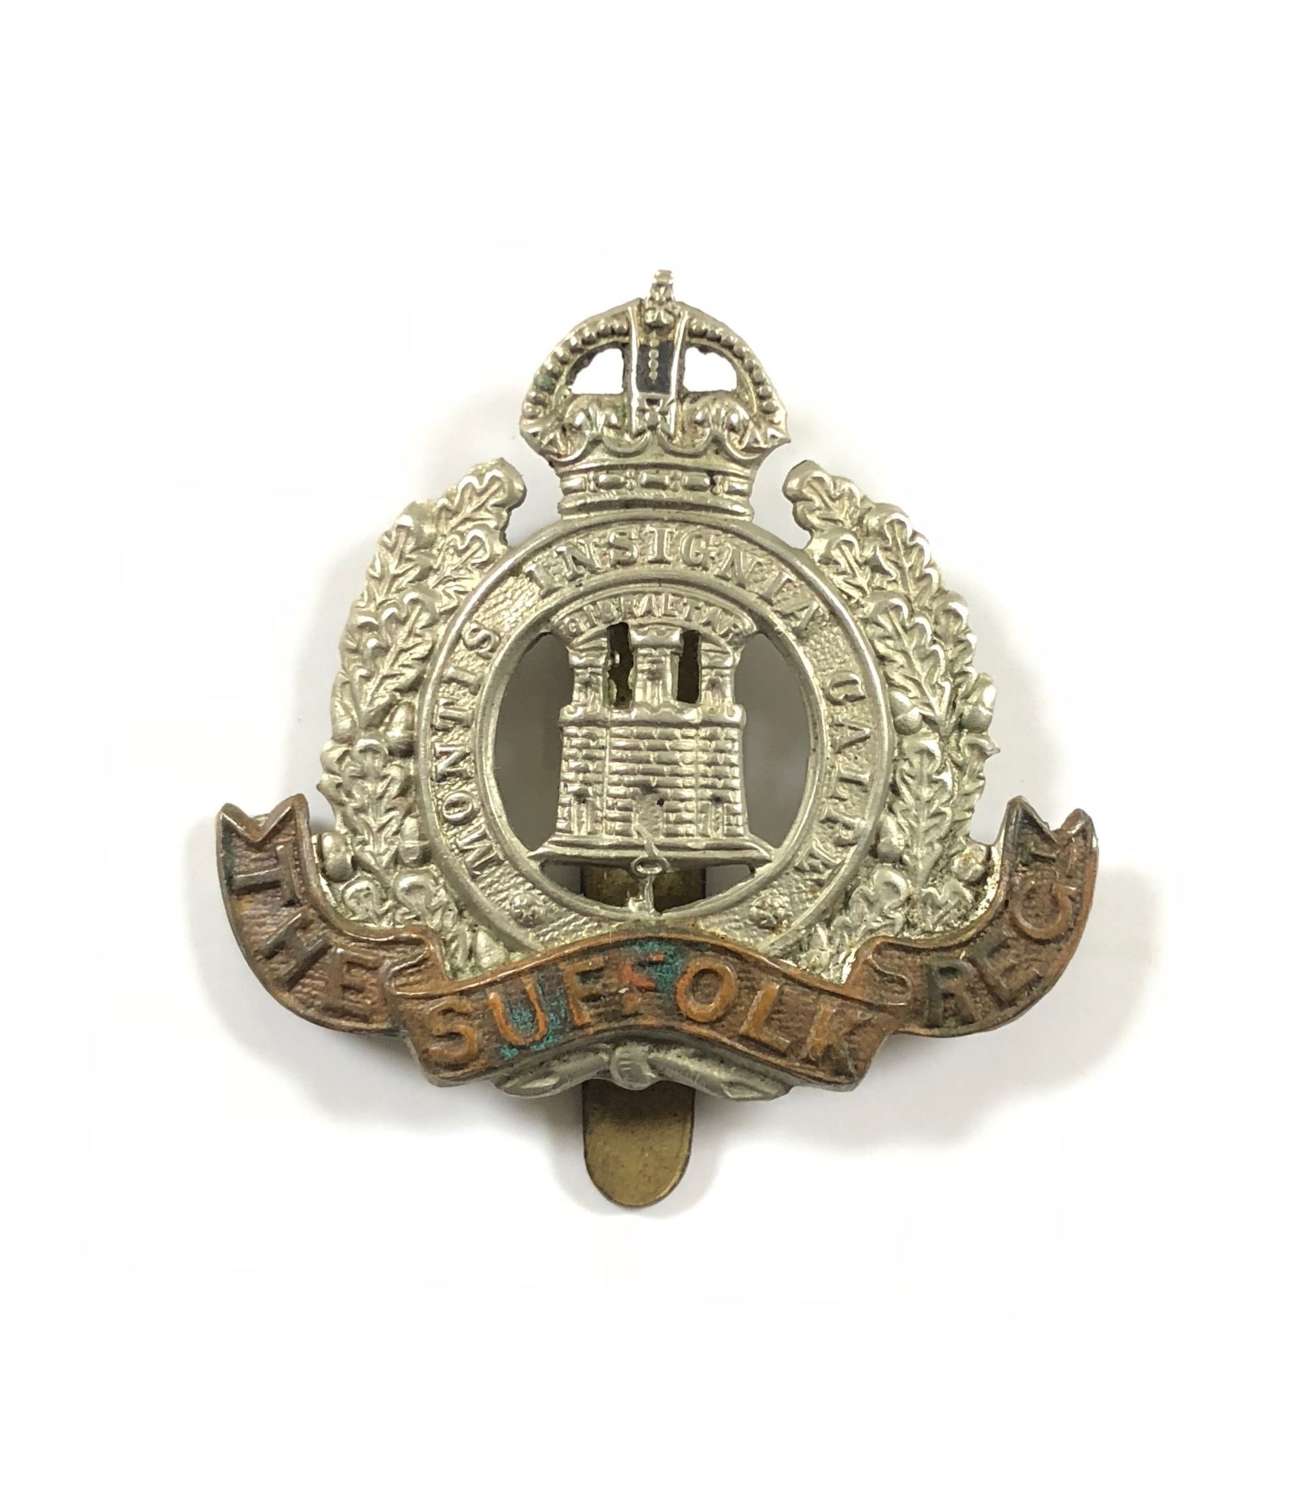 WW1 / WW2 Pattern Suffolk Regiment Cap Badge.